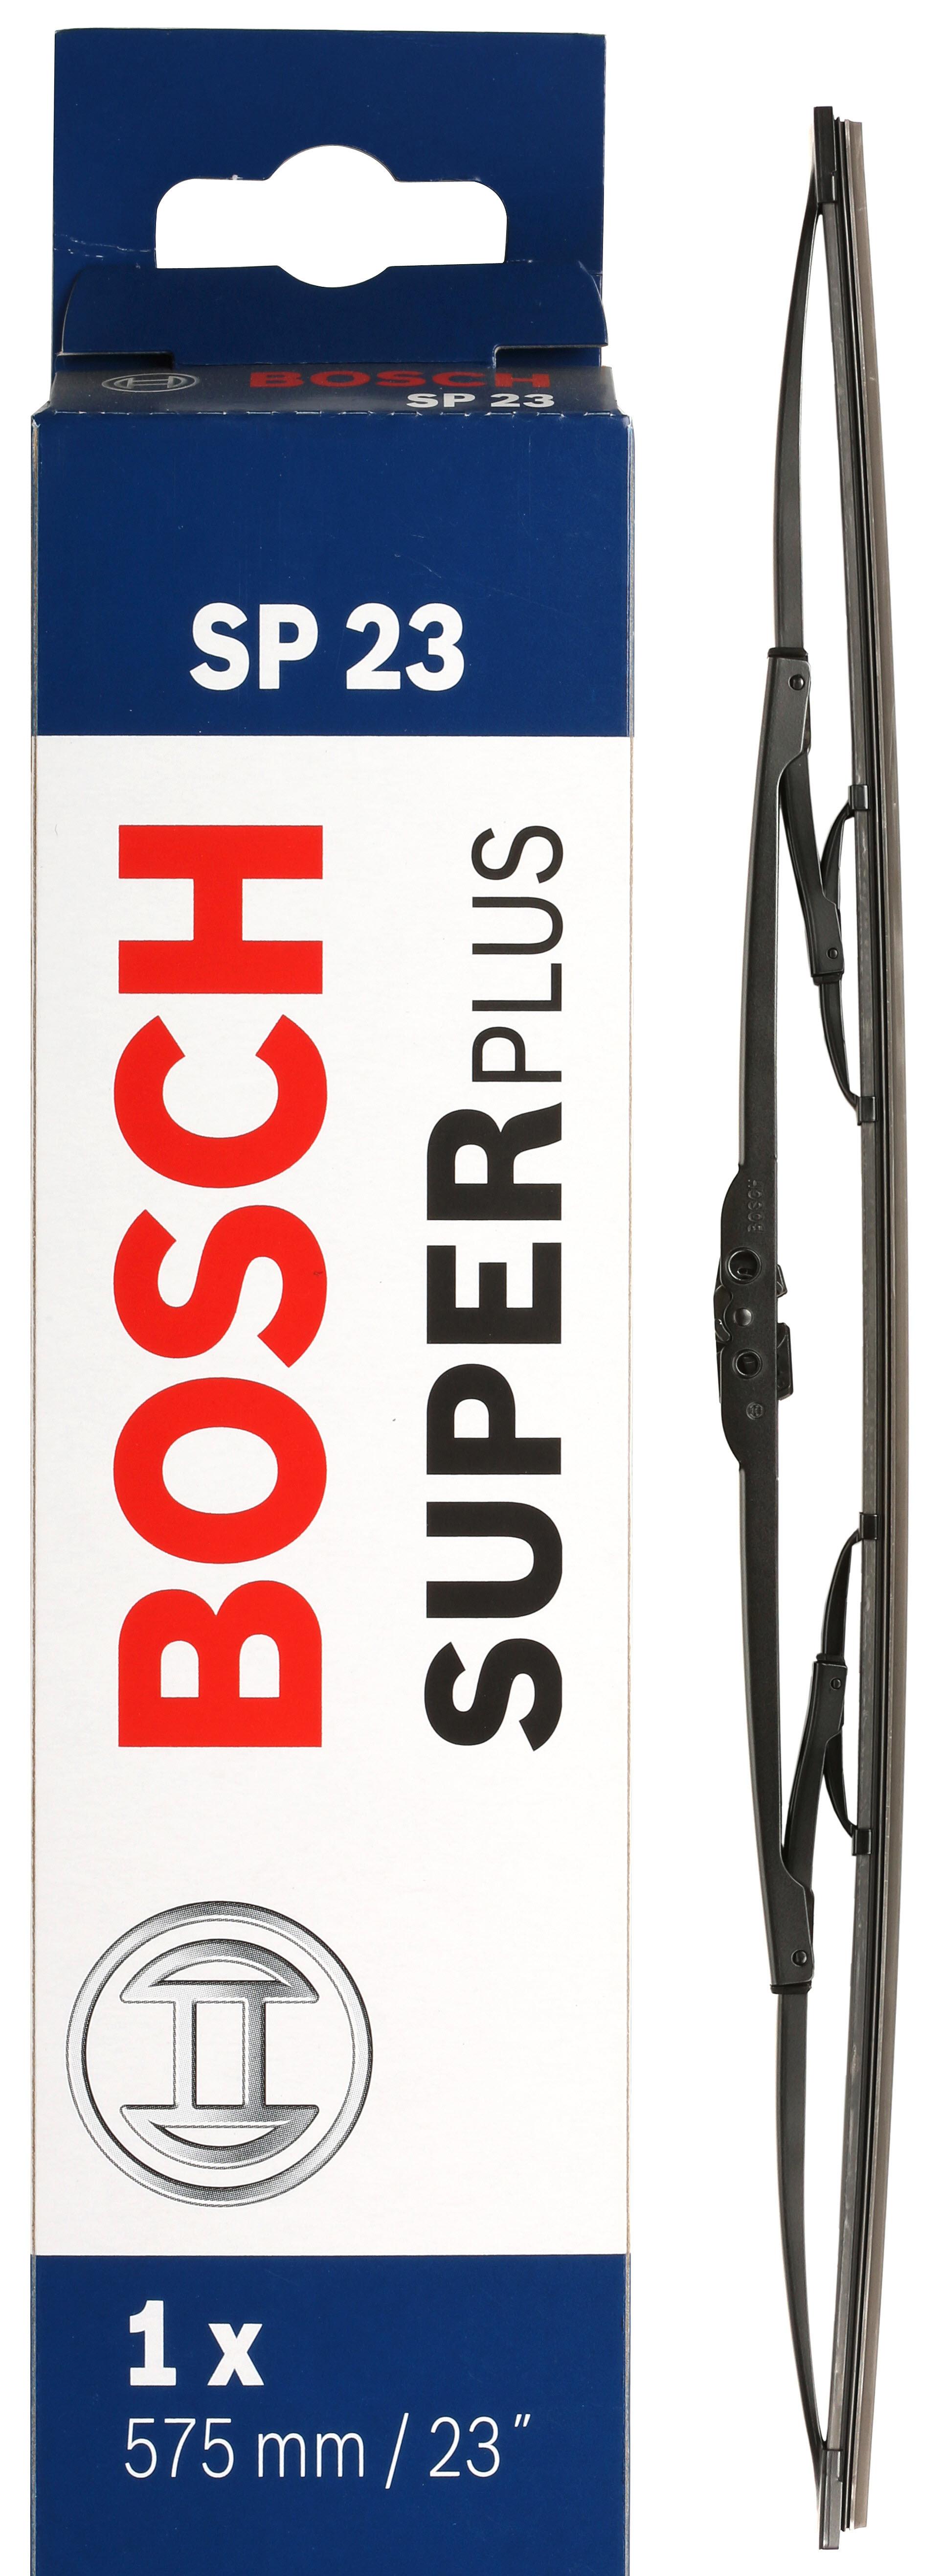 Bosch Sp23 Wiper Blade - Single